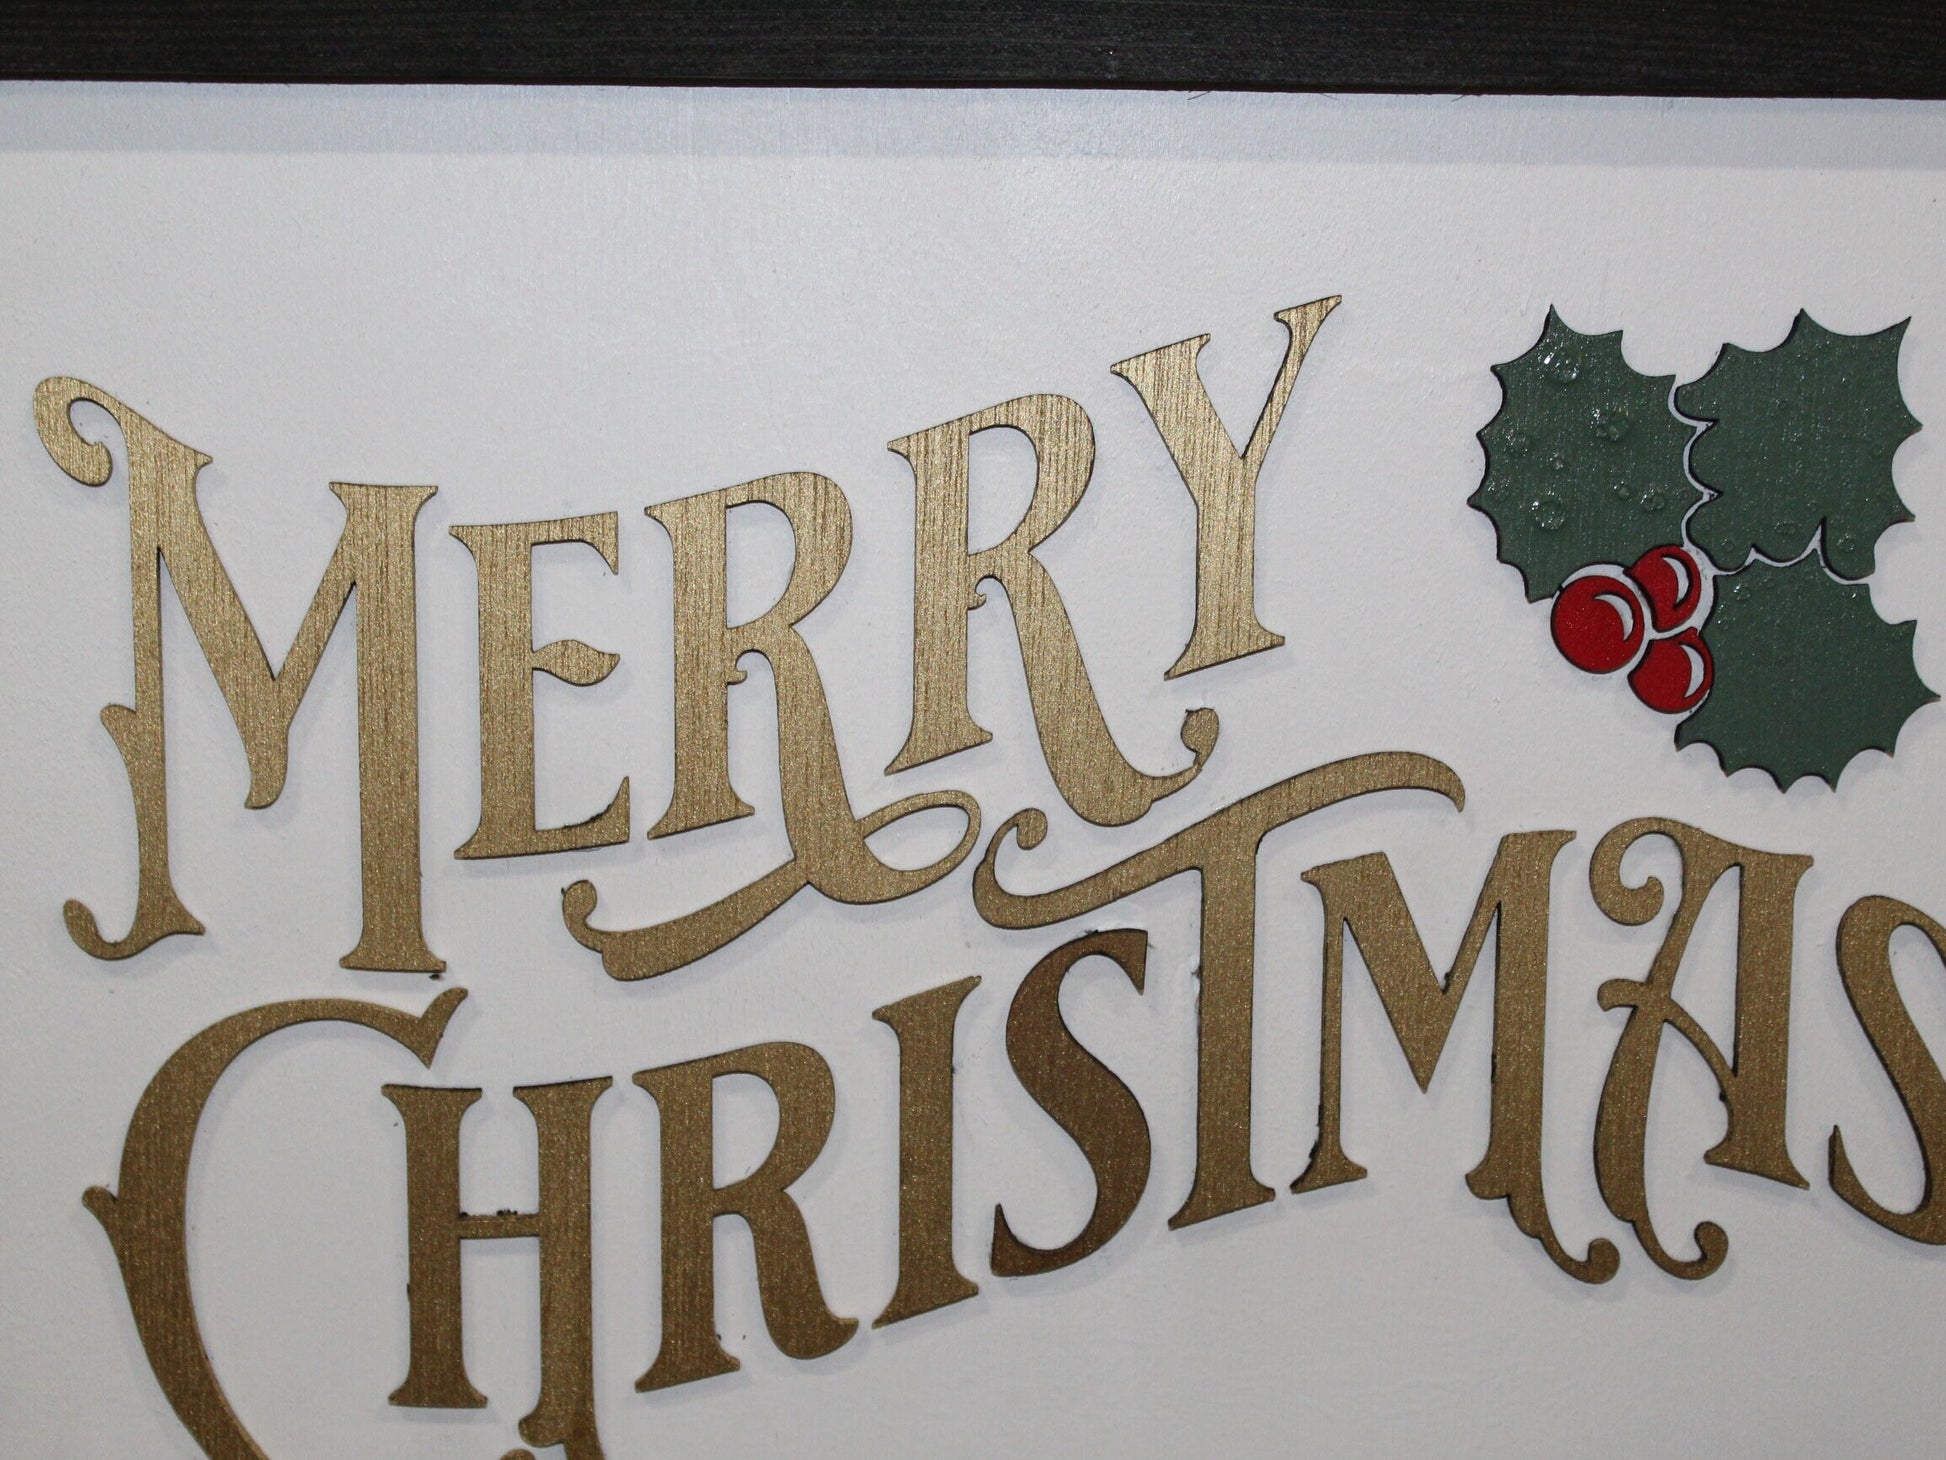 Merry Christmas Holly Berries Mistletoe 3D Classic Rustic Handmade Holiday Decor Christmas Spirit Gold Red Green Script